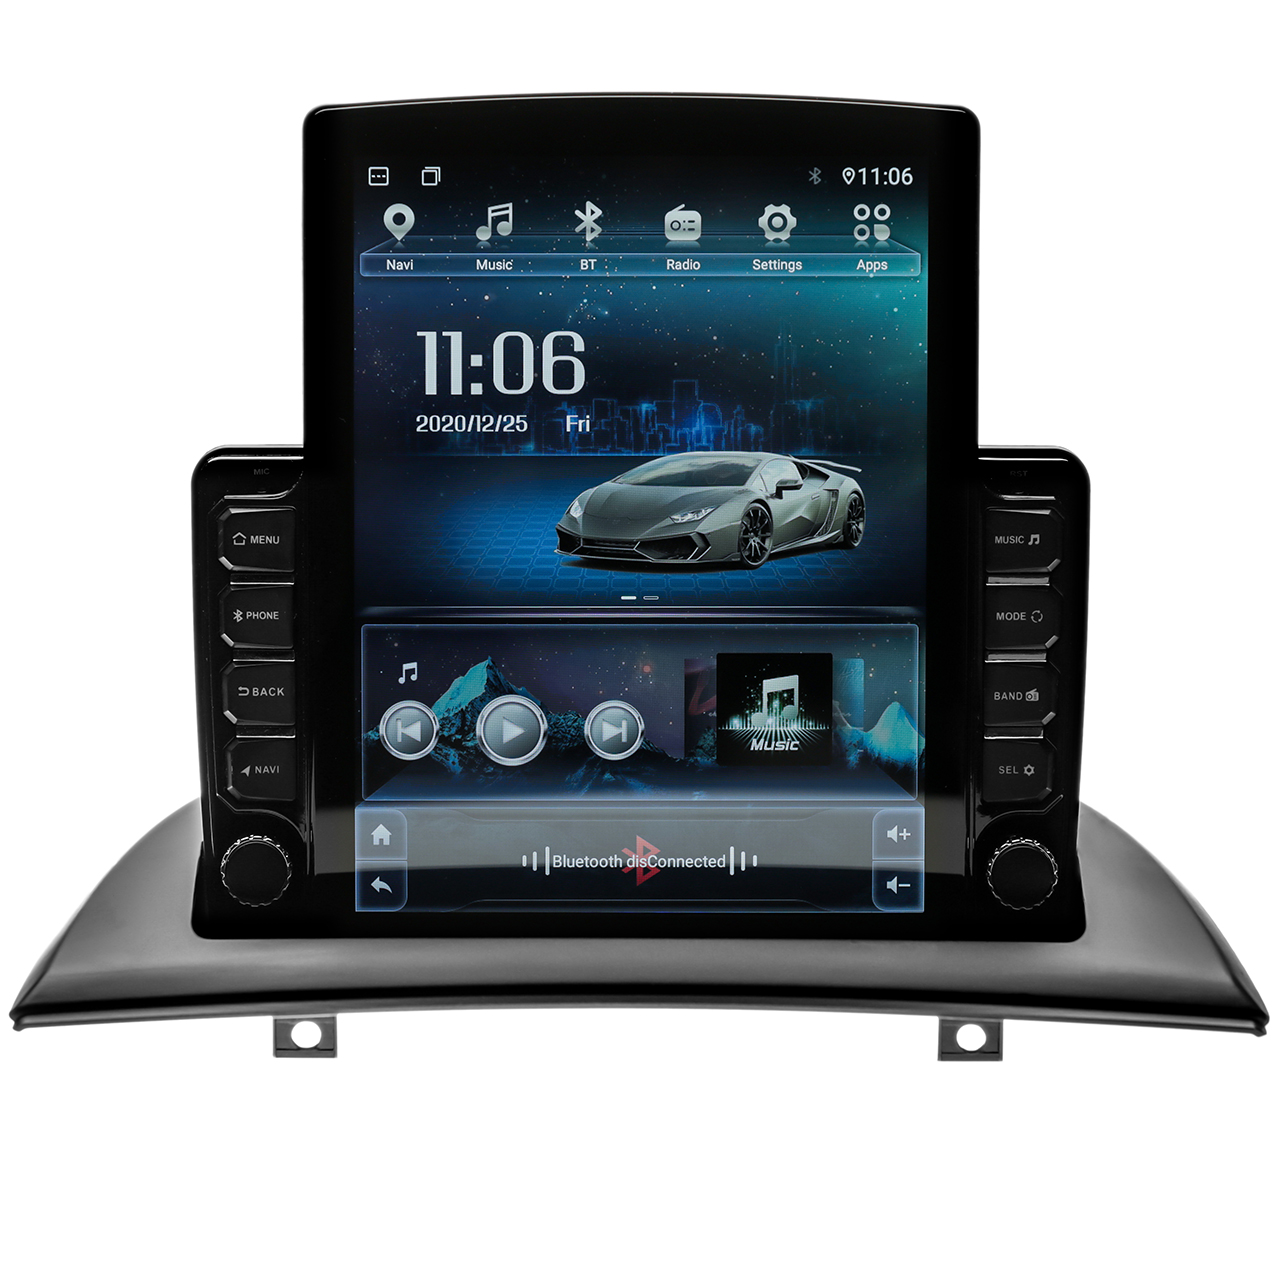 Navigatie AUTONAV PLUS Android GPS Dedicata BMW X3 E83, Model XPERT Memorie 16GB Stocare, 1GB DDR3 RAM, Butoane Si Volum Fizice, Display Vertical Stil Tesla 10